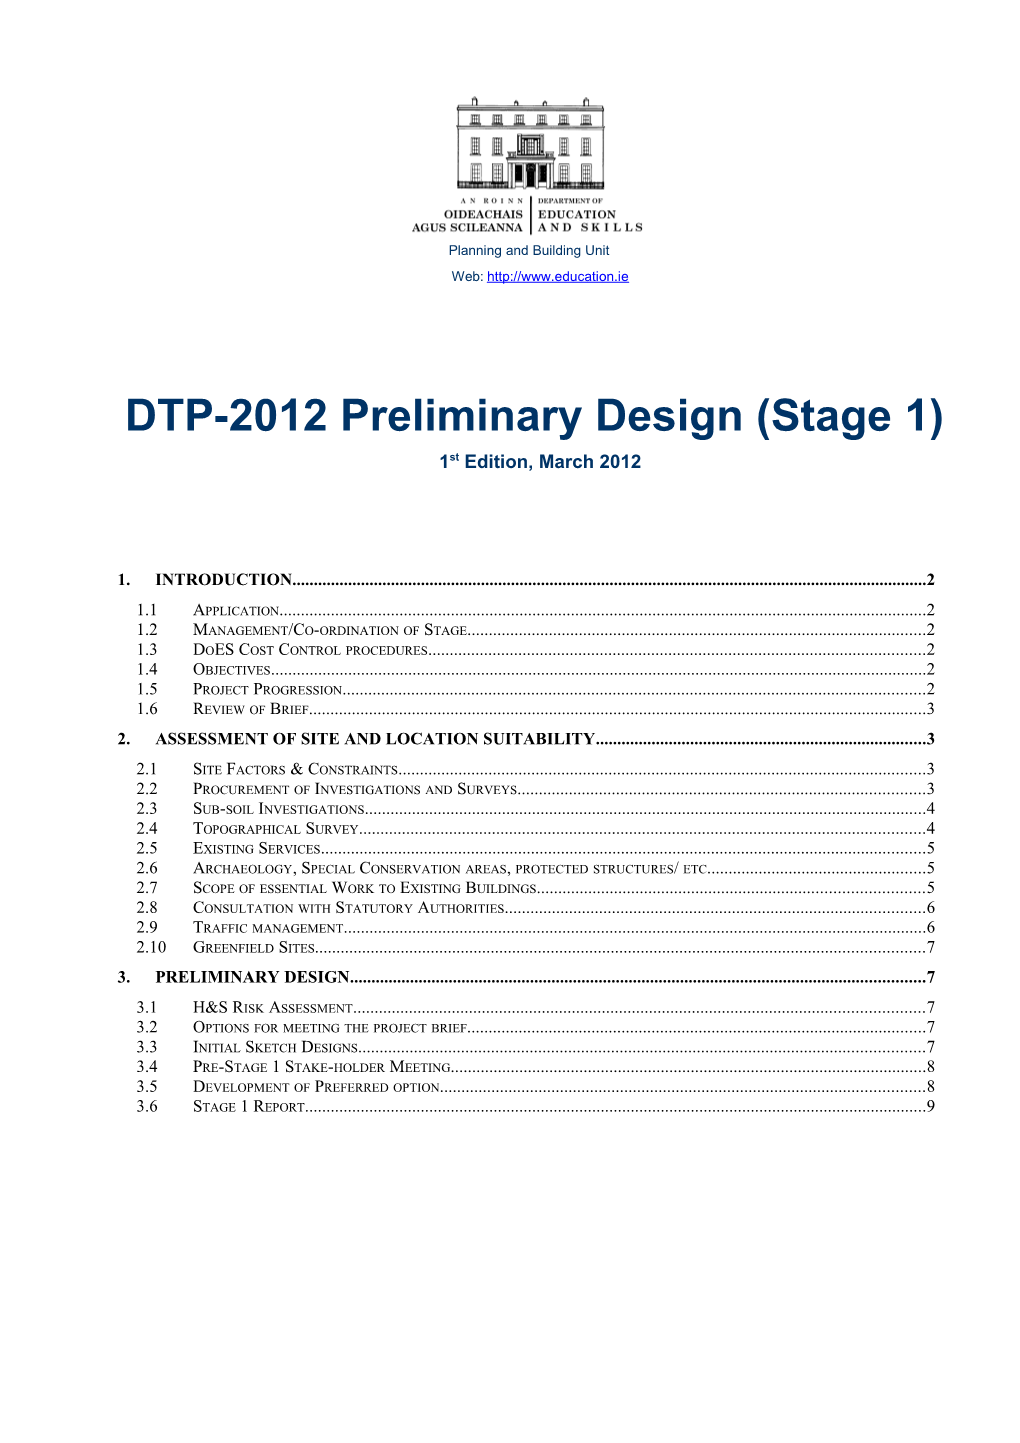 DTP-2012 Preliminary Design (Stage 1)